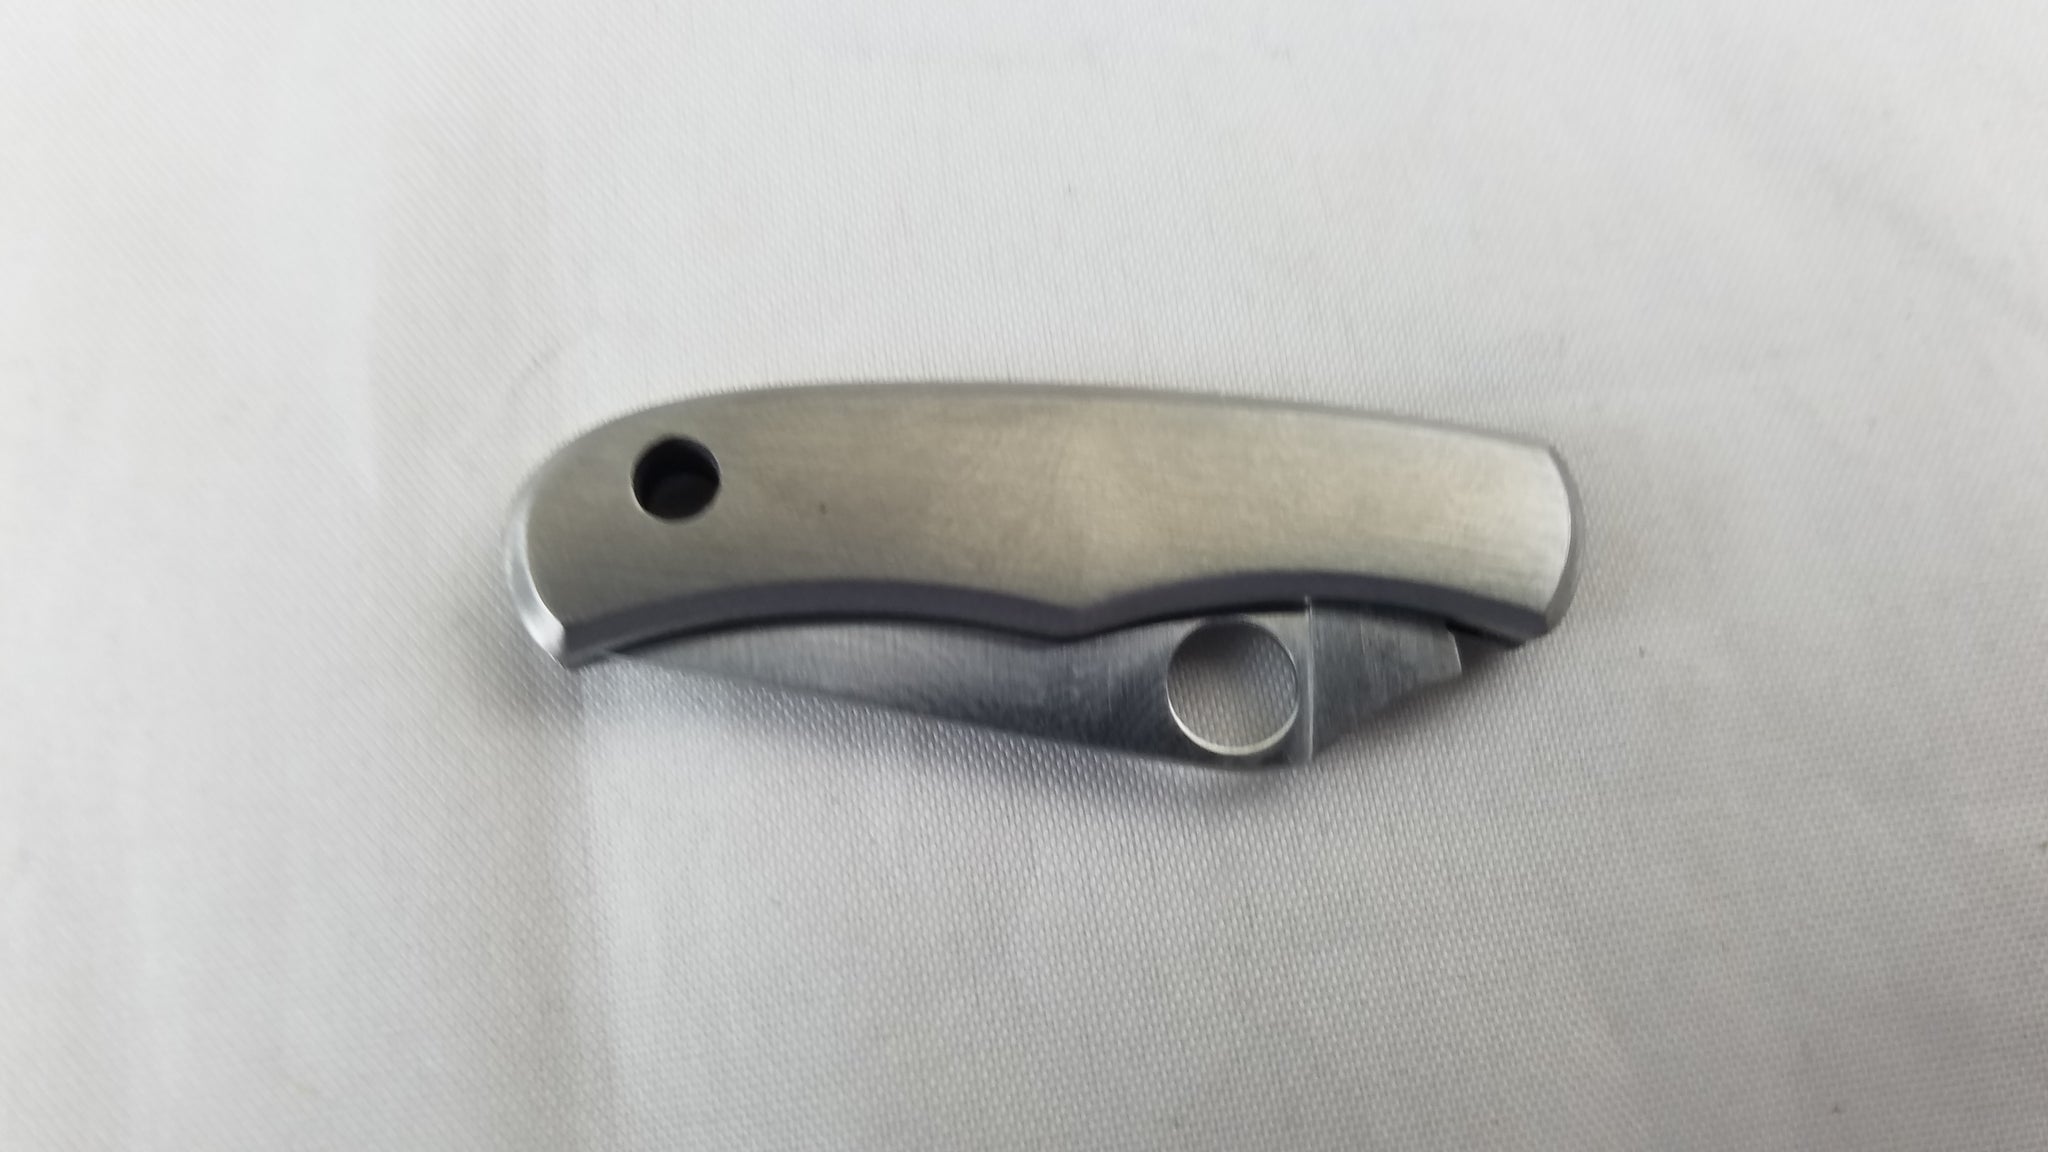 Spyderco Bug Mini Key Chain Knife - Stainless Steel